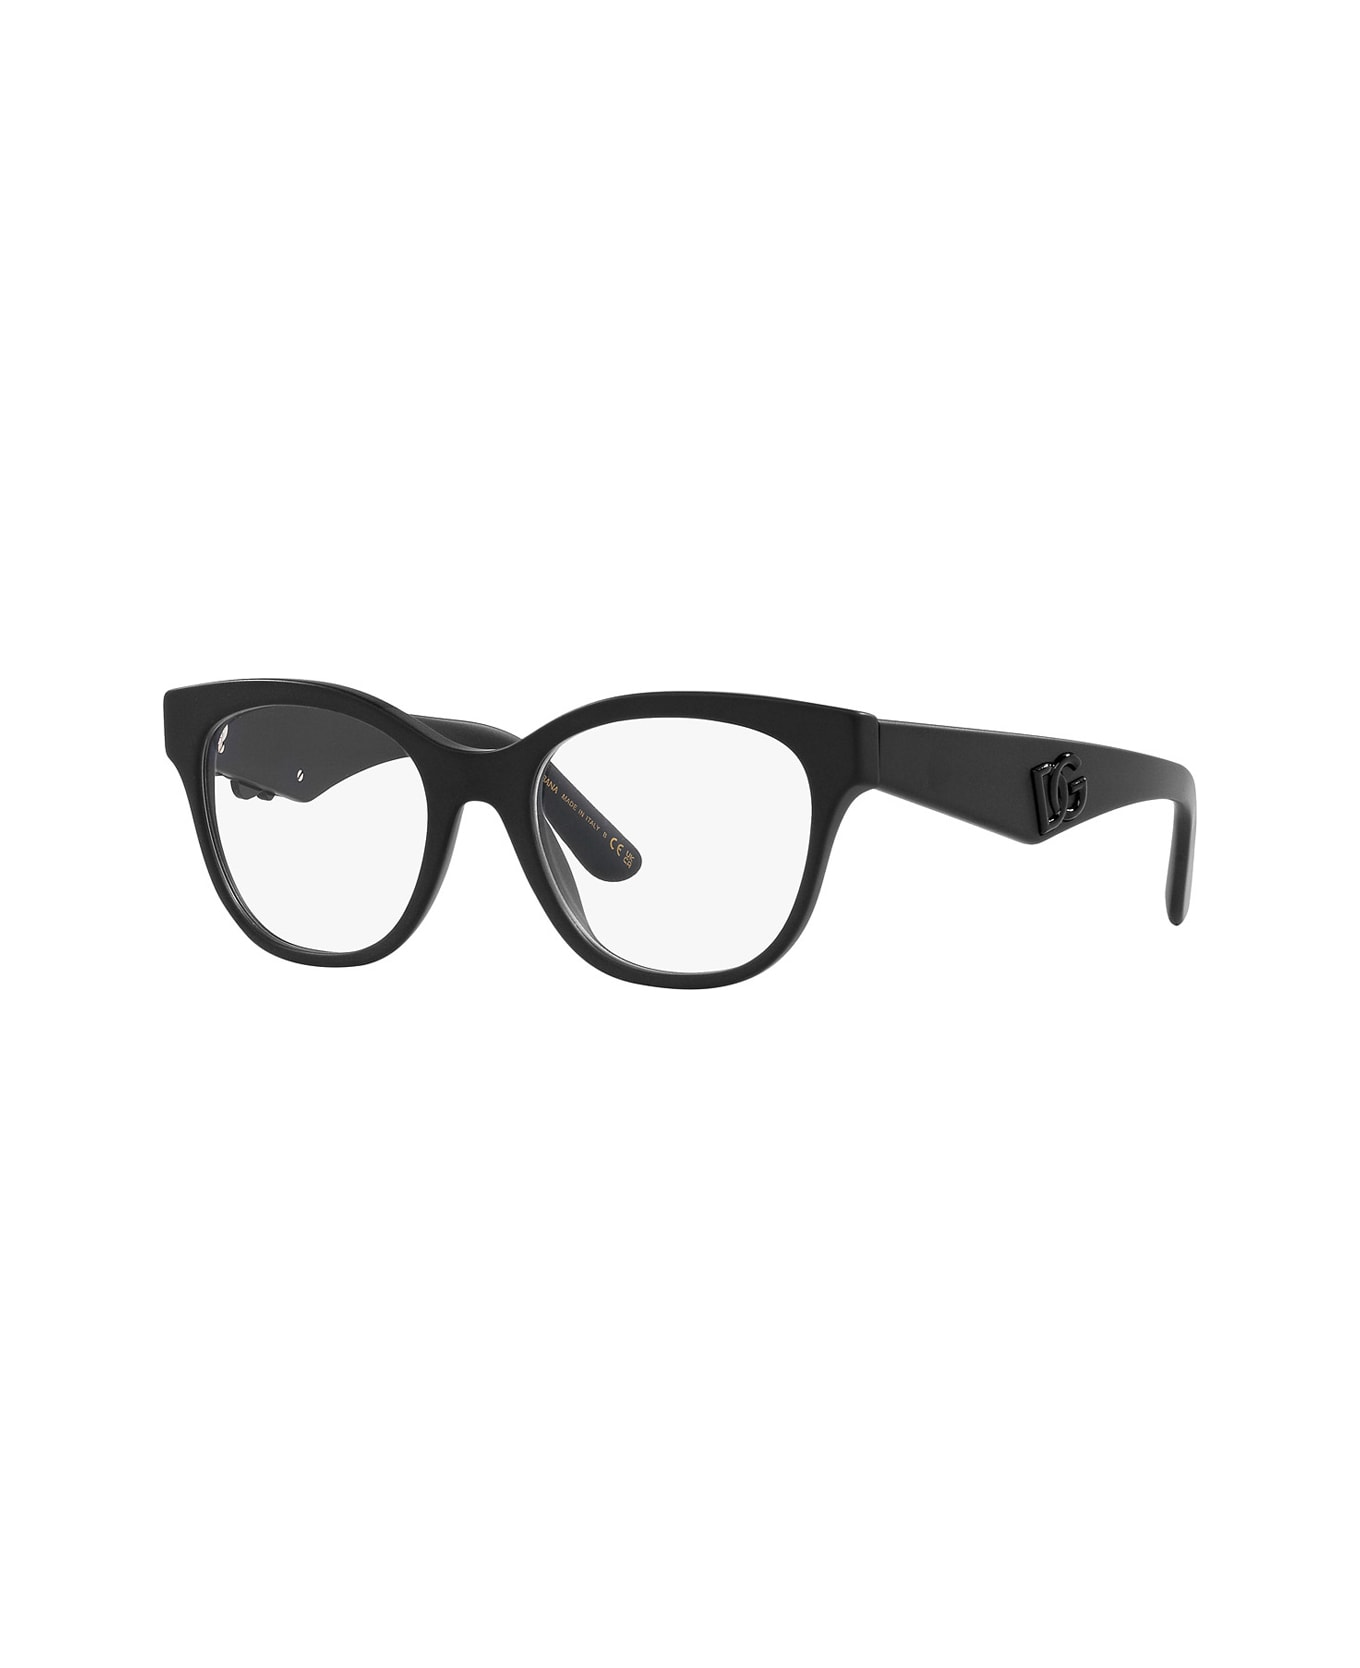 Dolce & Gabbana Eyewear Dg3371 2525 Glasses - Nero